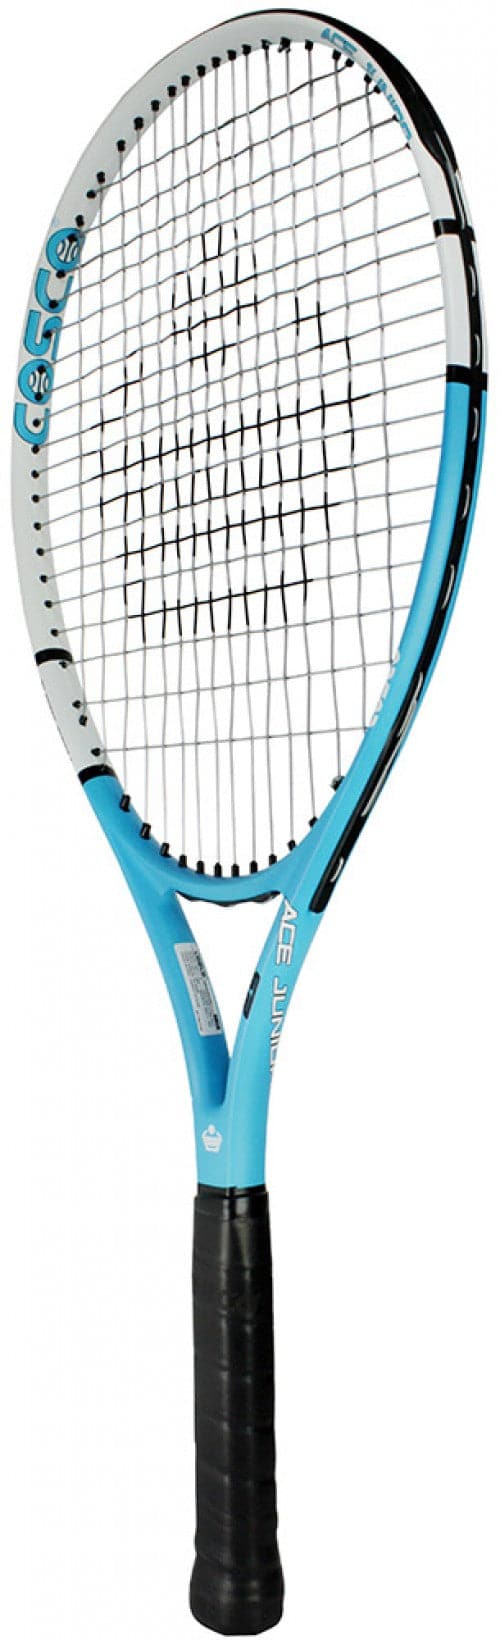 Tennis Racket Ace 25